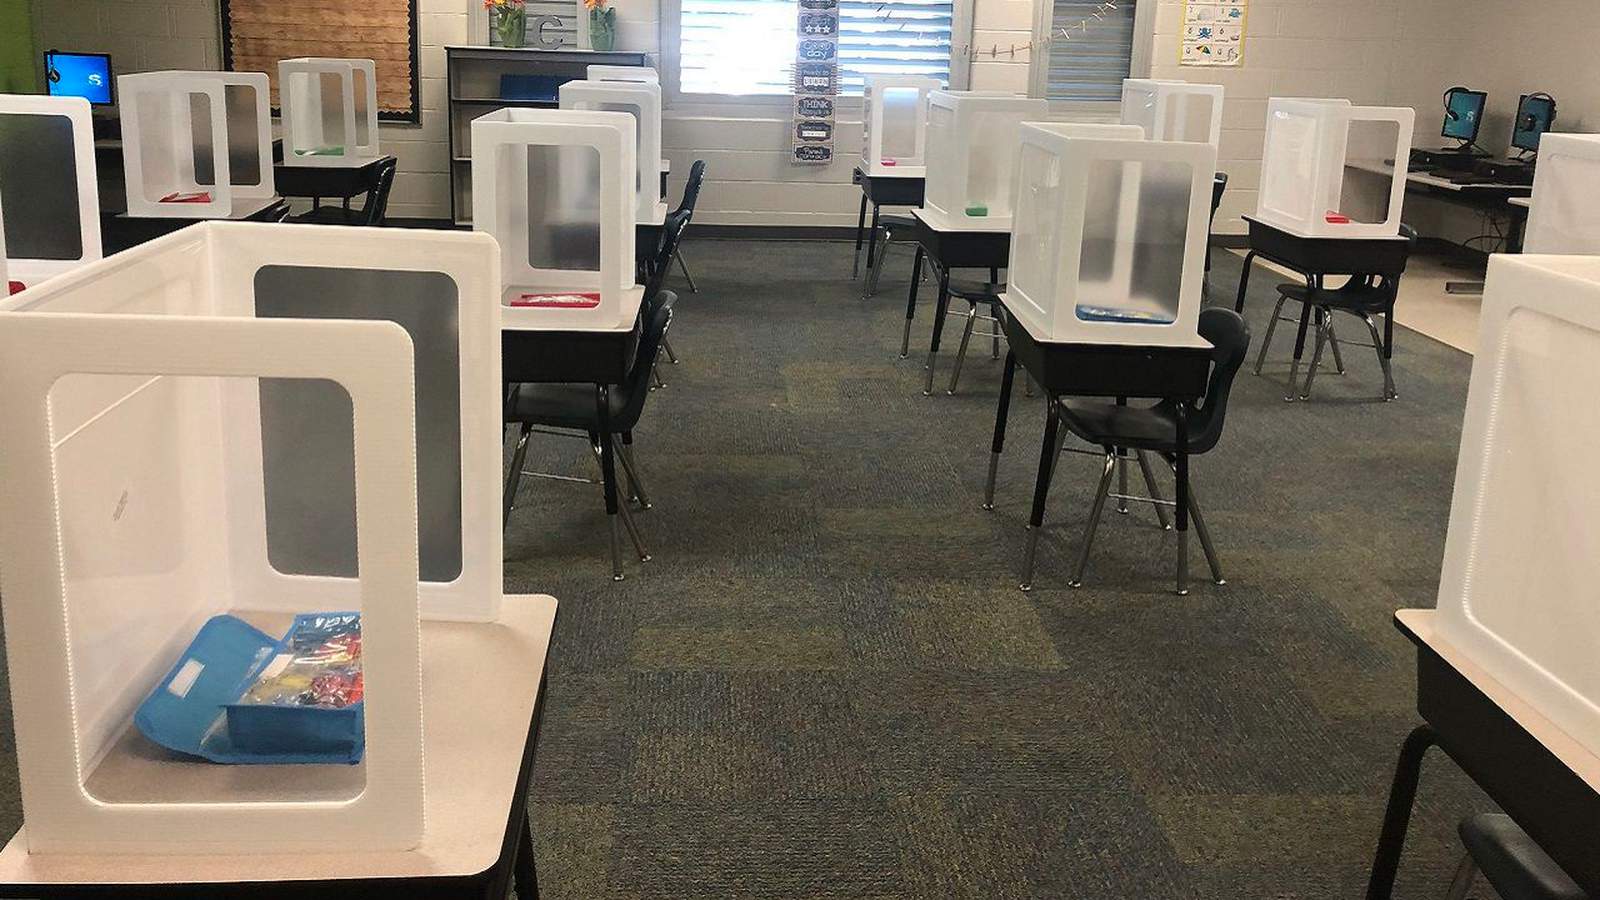 Seminole County provides updates on school preperations